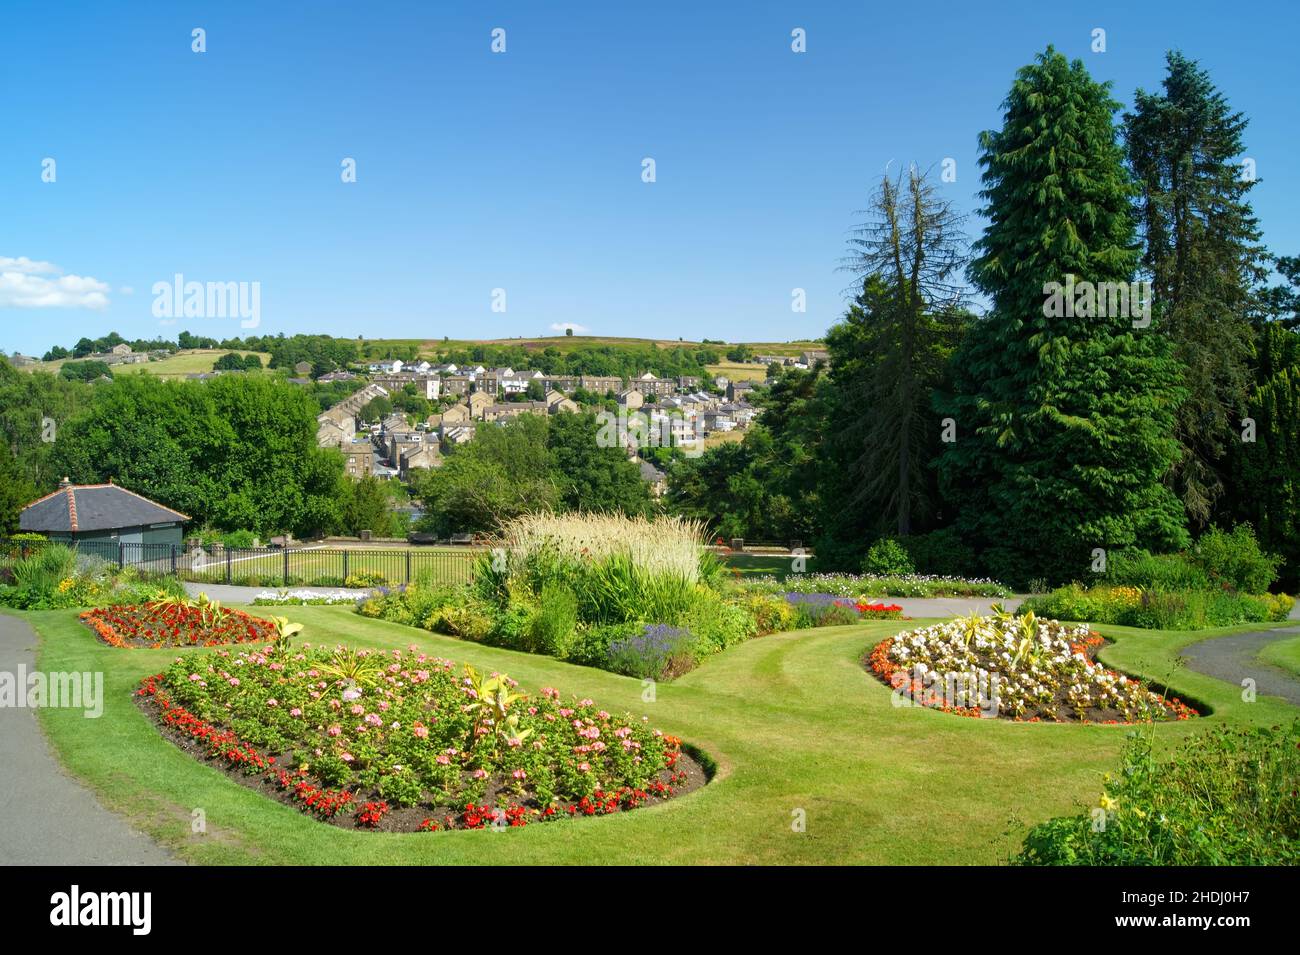 Royaume-Uni, West Yorkshire, Haworth, Central Park Bowling Green et Flower Beds. Banque D'Images